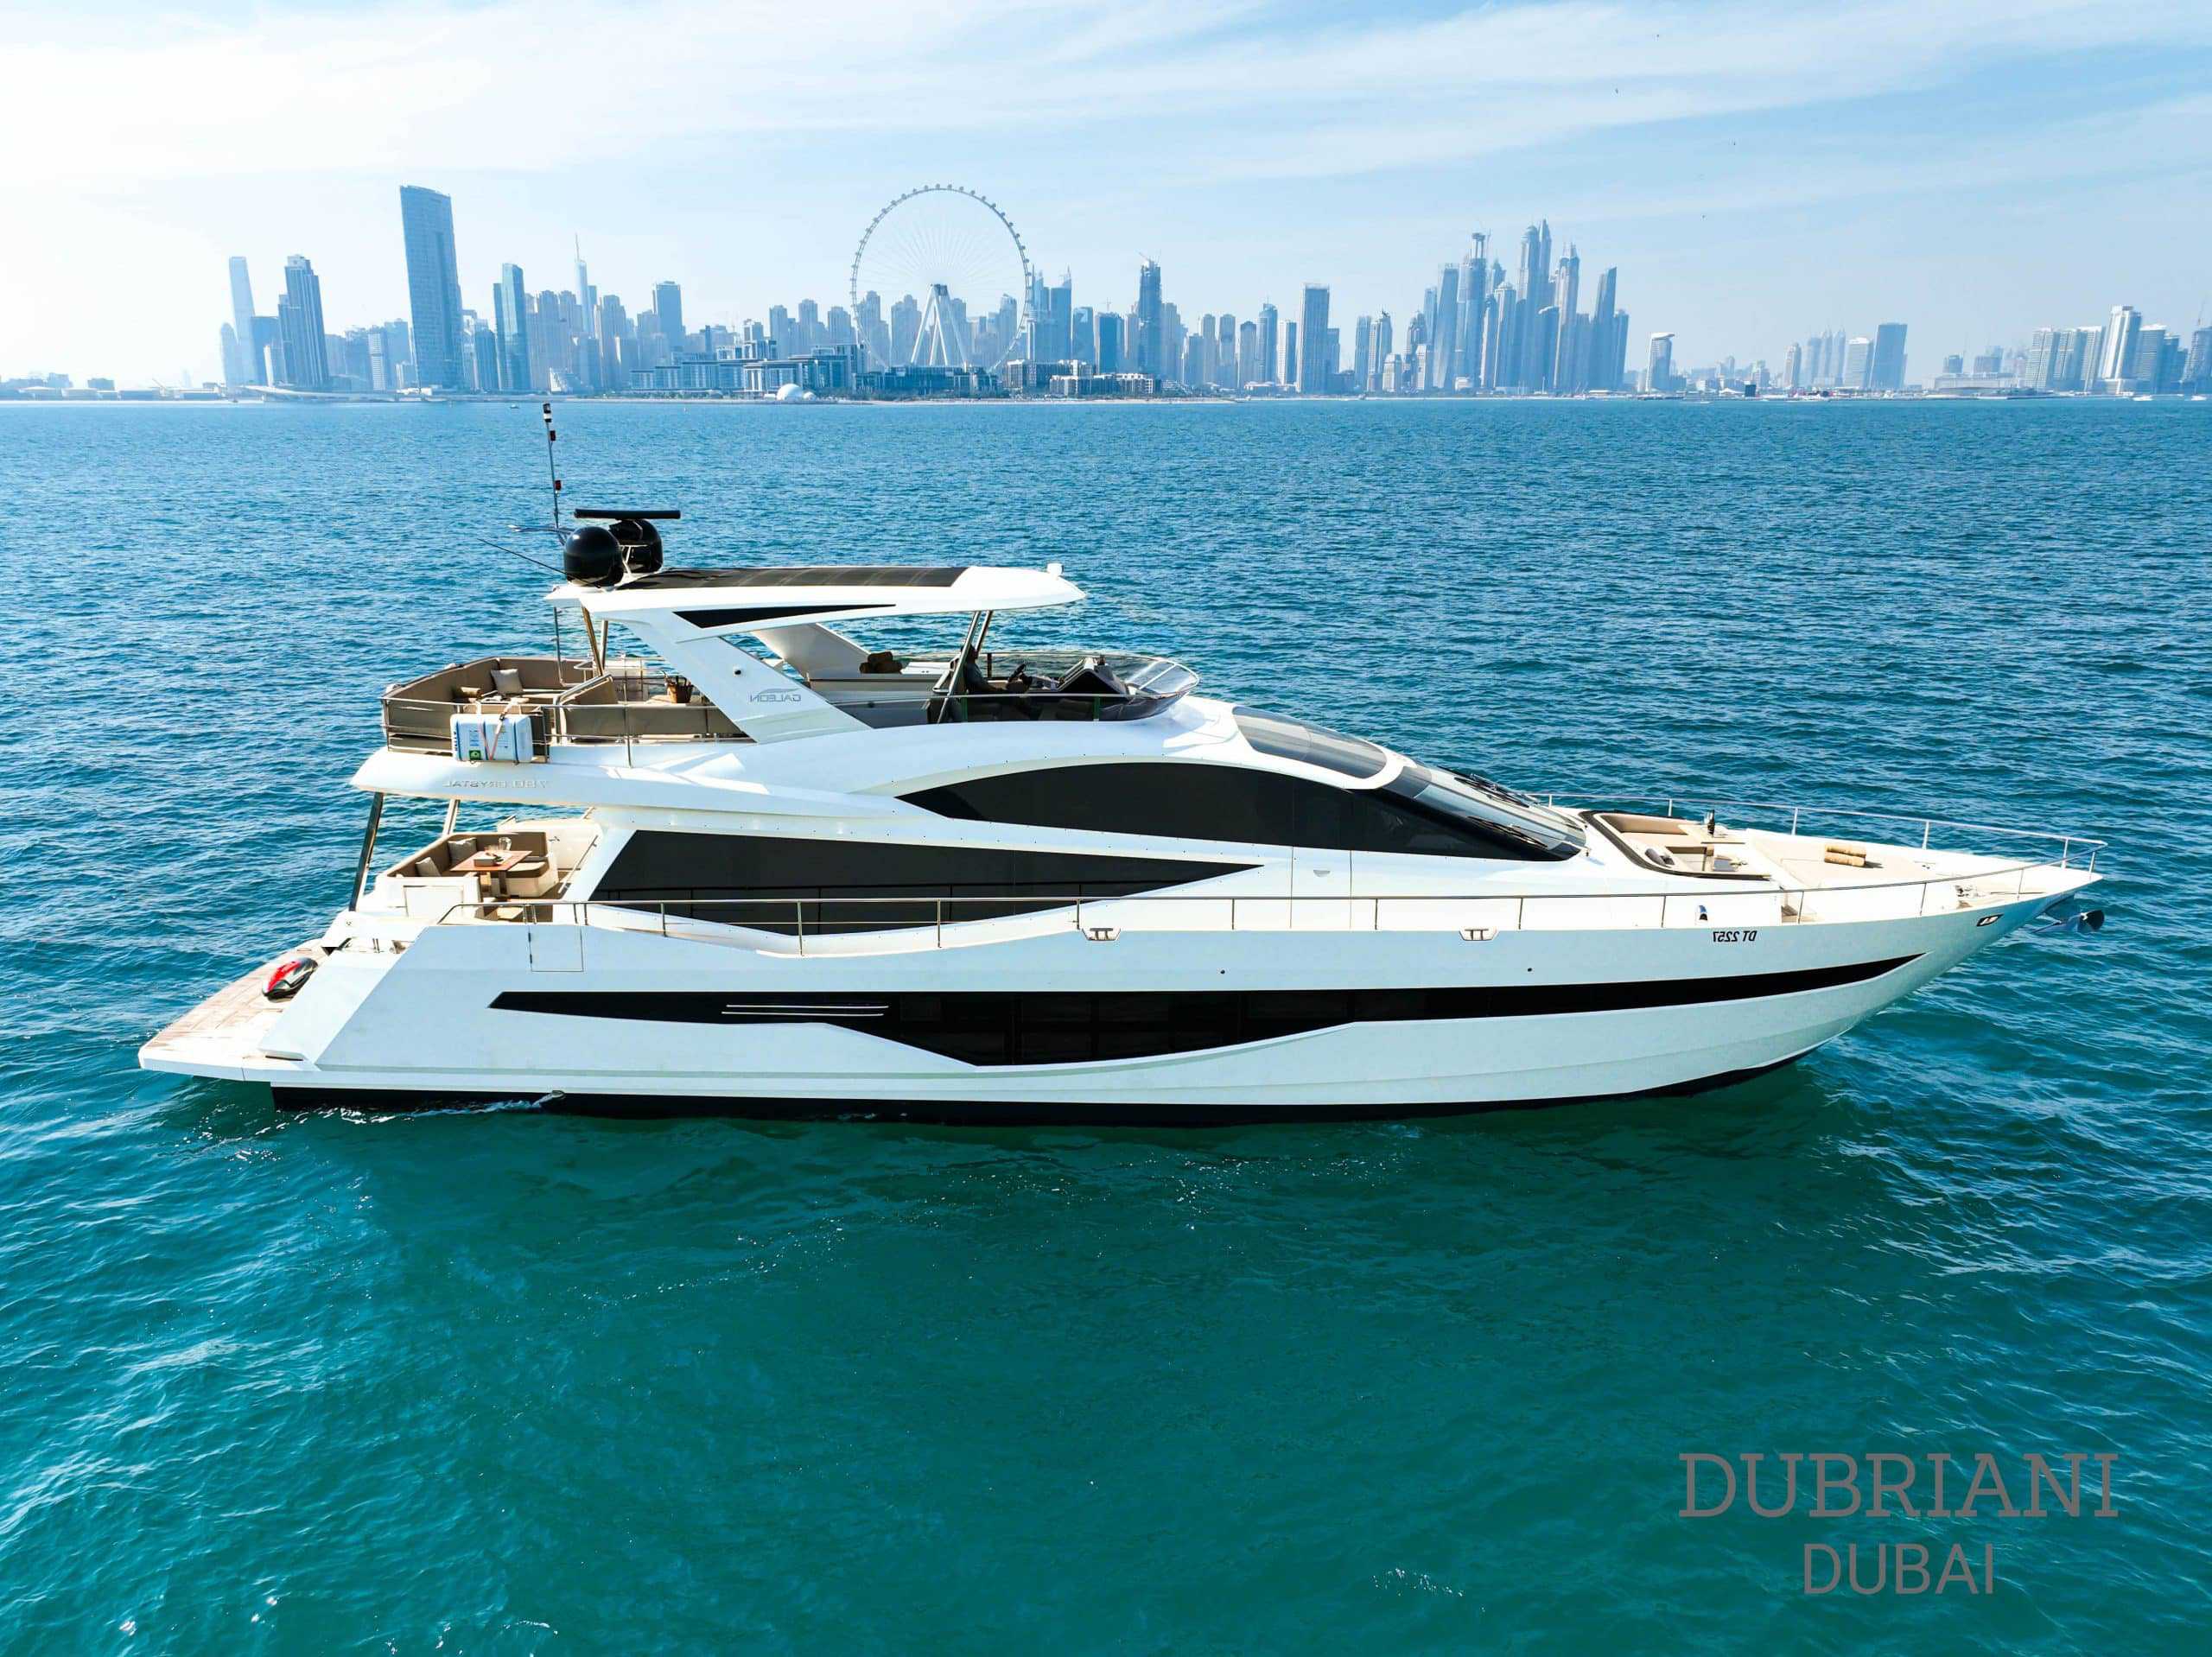 galeon yacht dubai marina nye